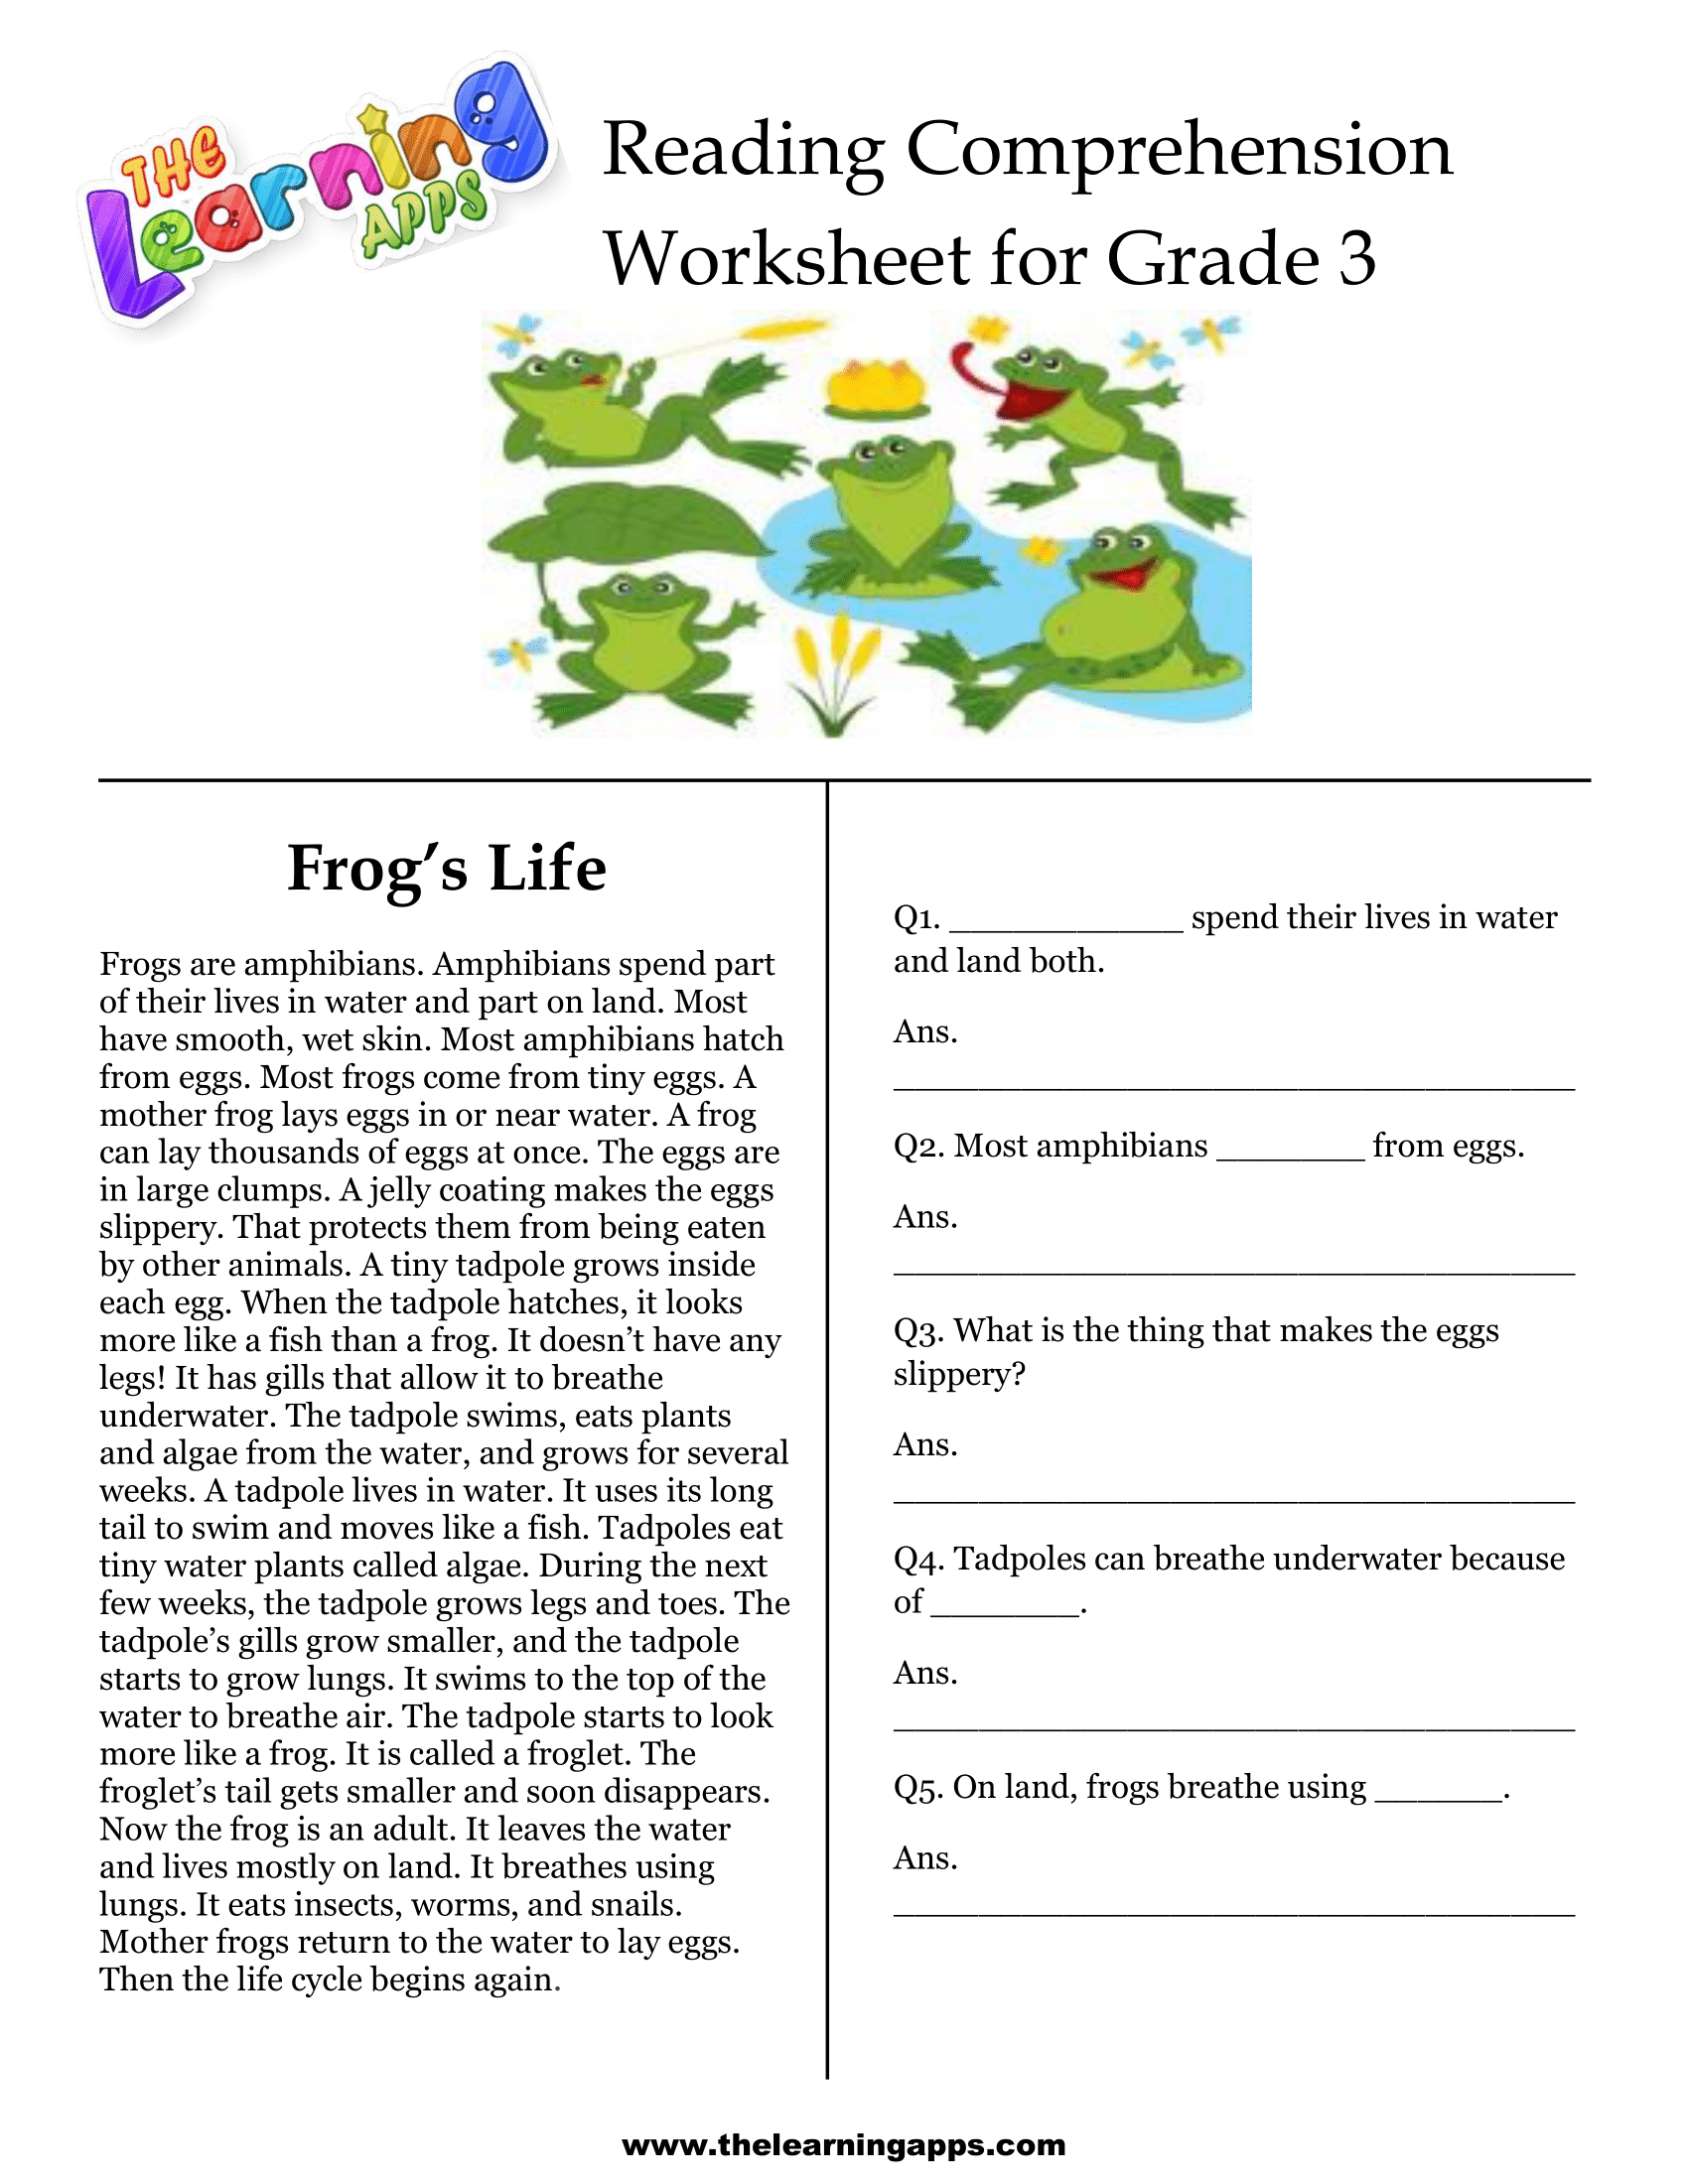 Free Online Printable Reading Comprehension Worksheets For 3rd Grade